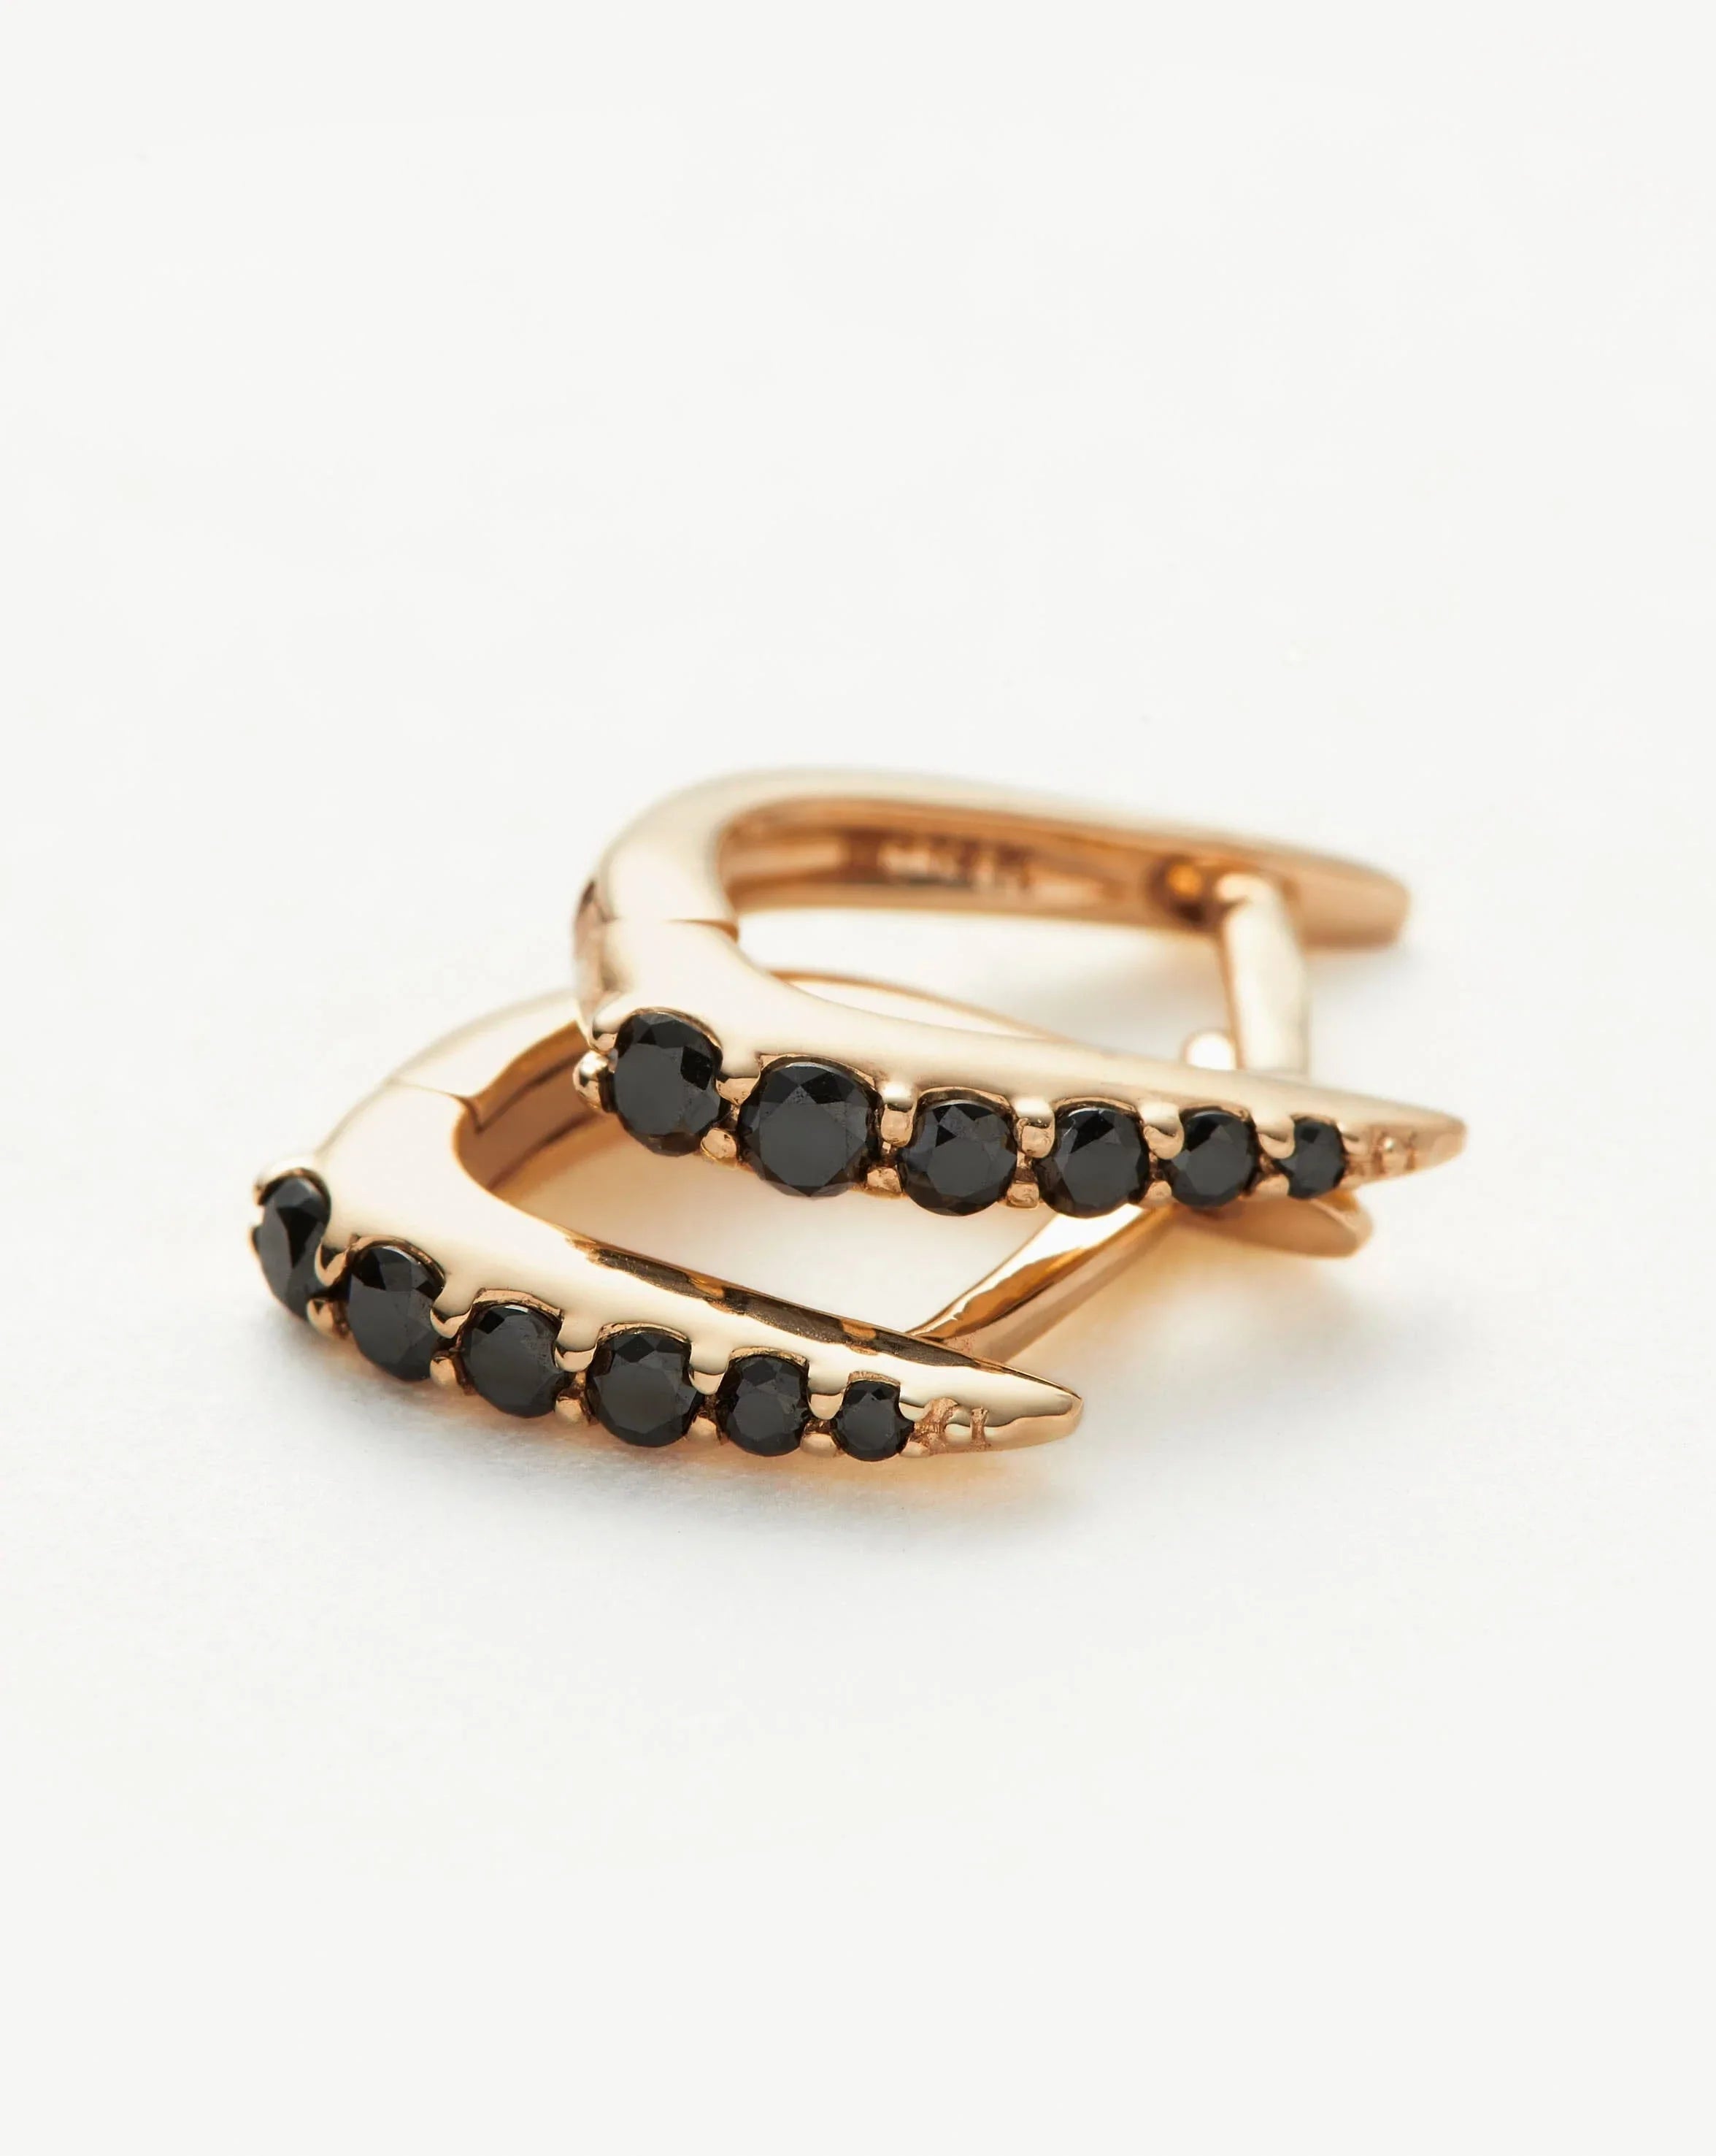 Fine Claw Huggies | 14ct Solid Gold/Black Diamond Earrings Missoma 